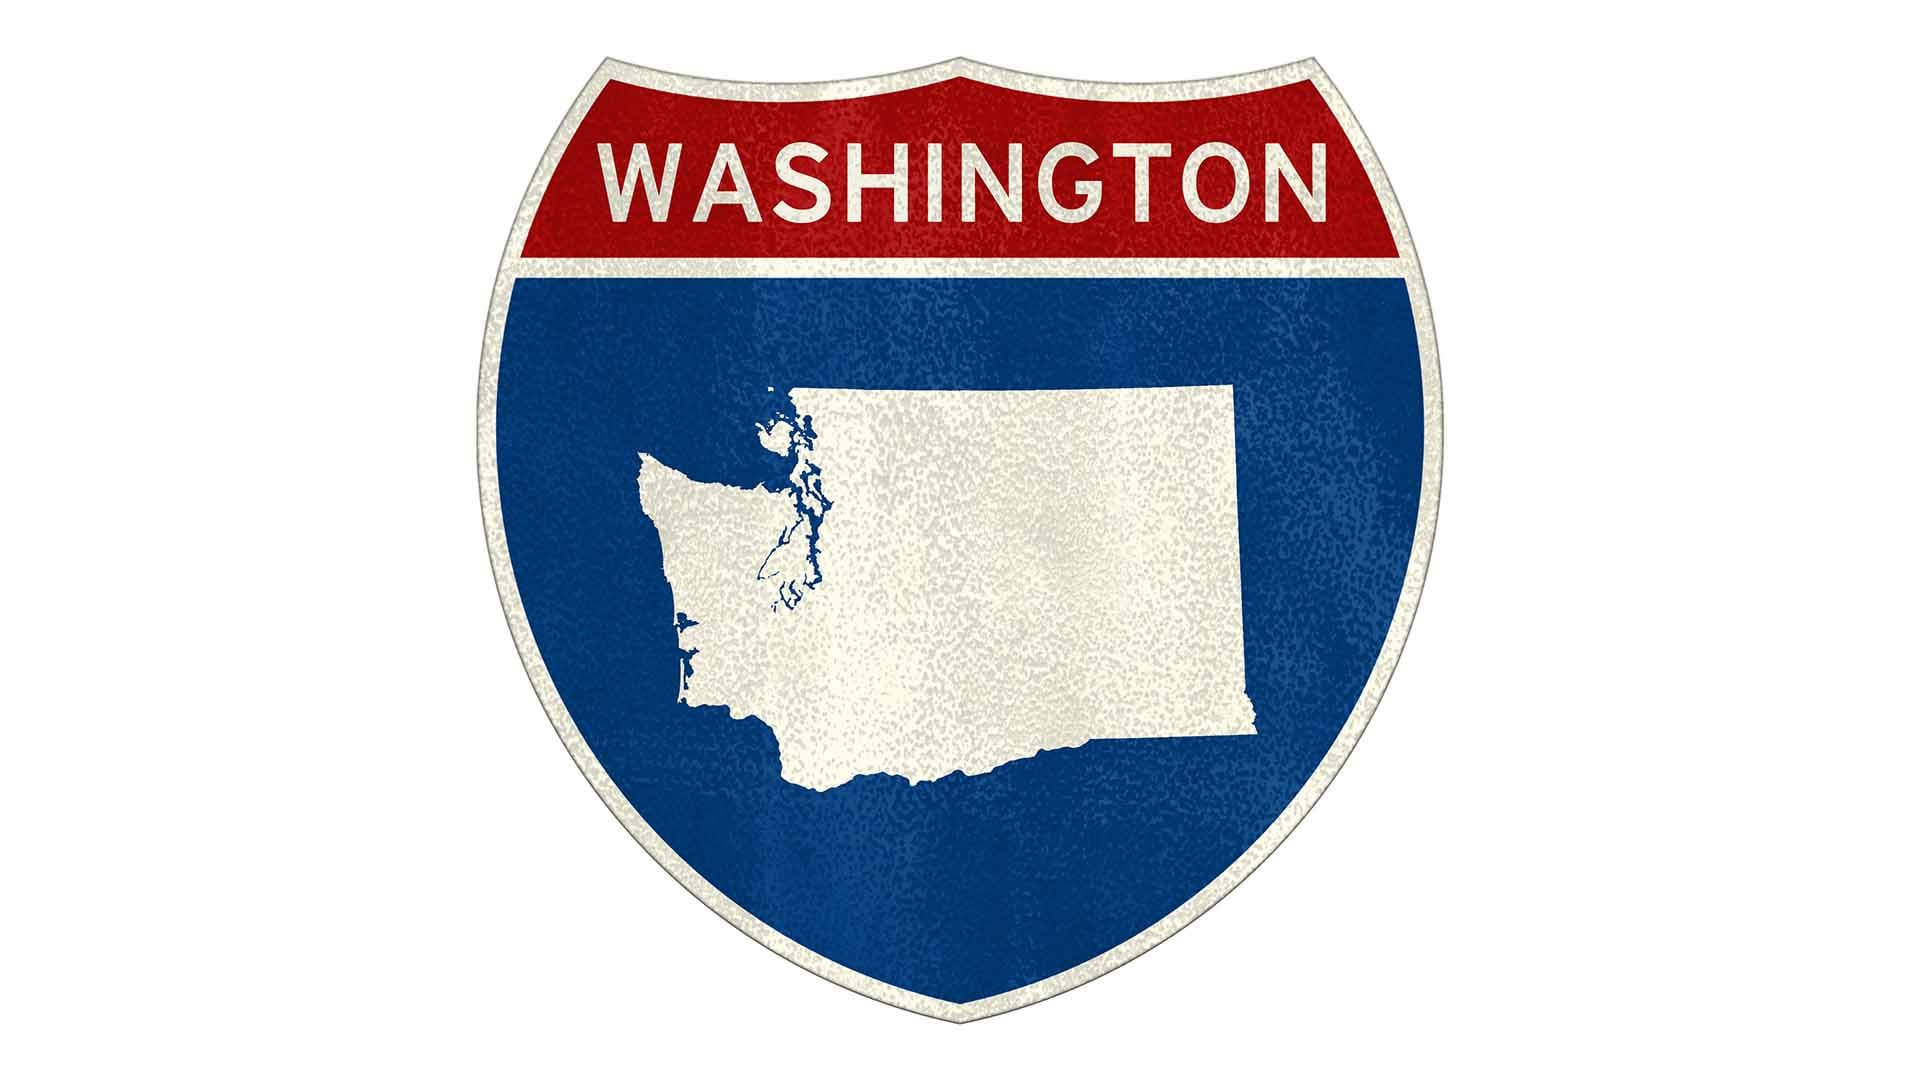 Washington state roadside sign